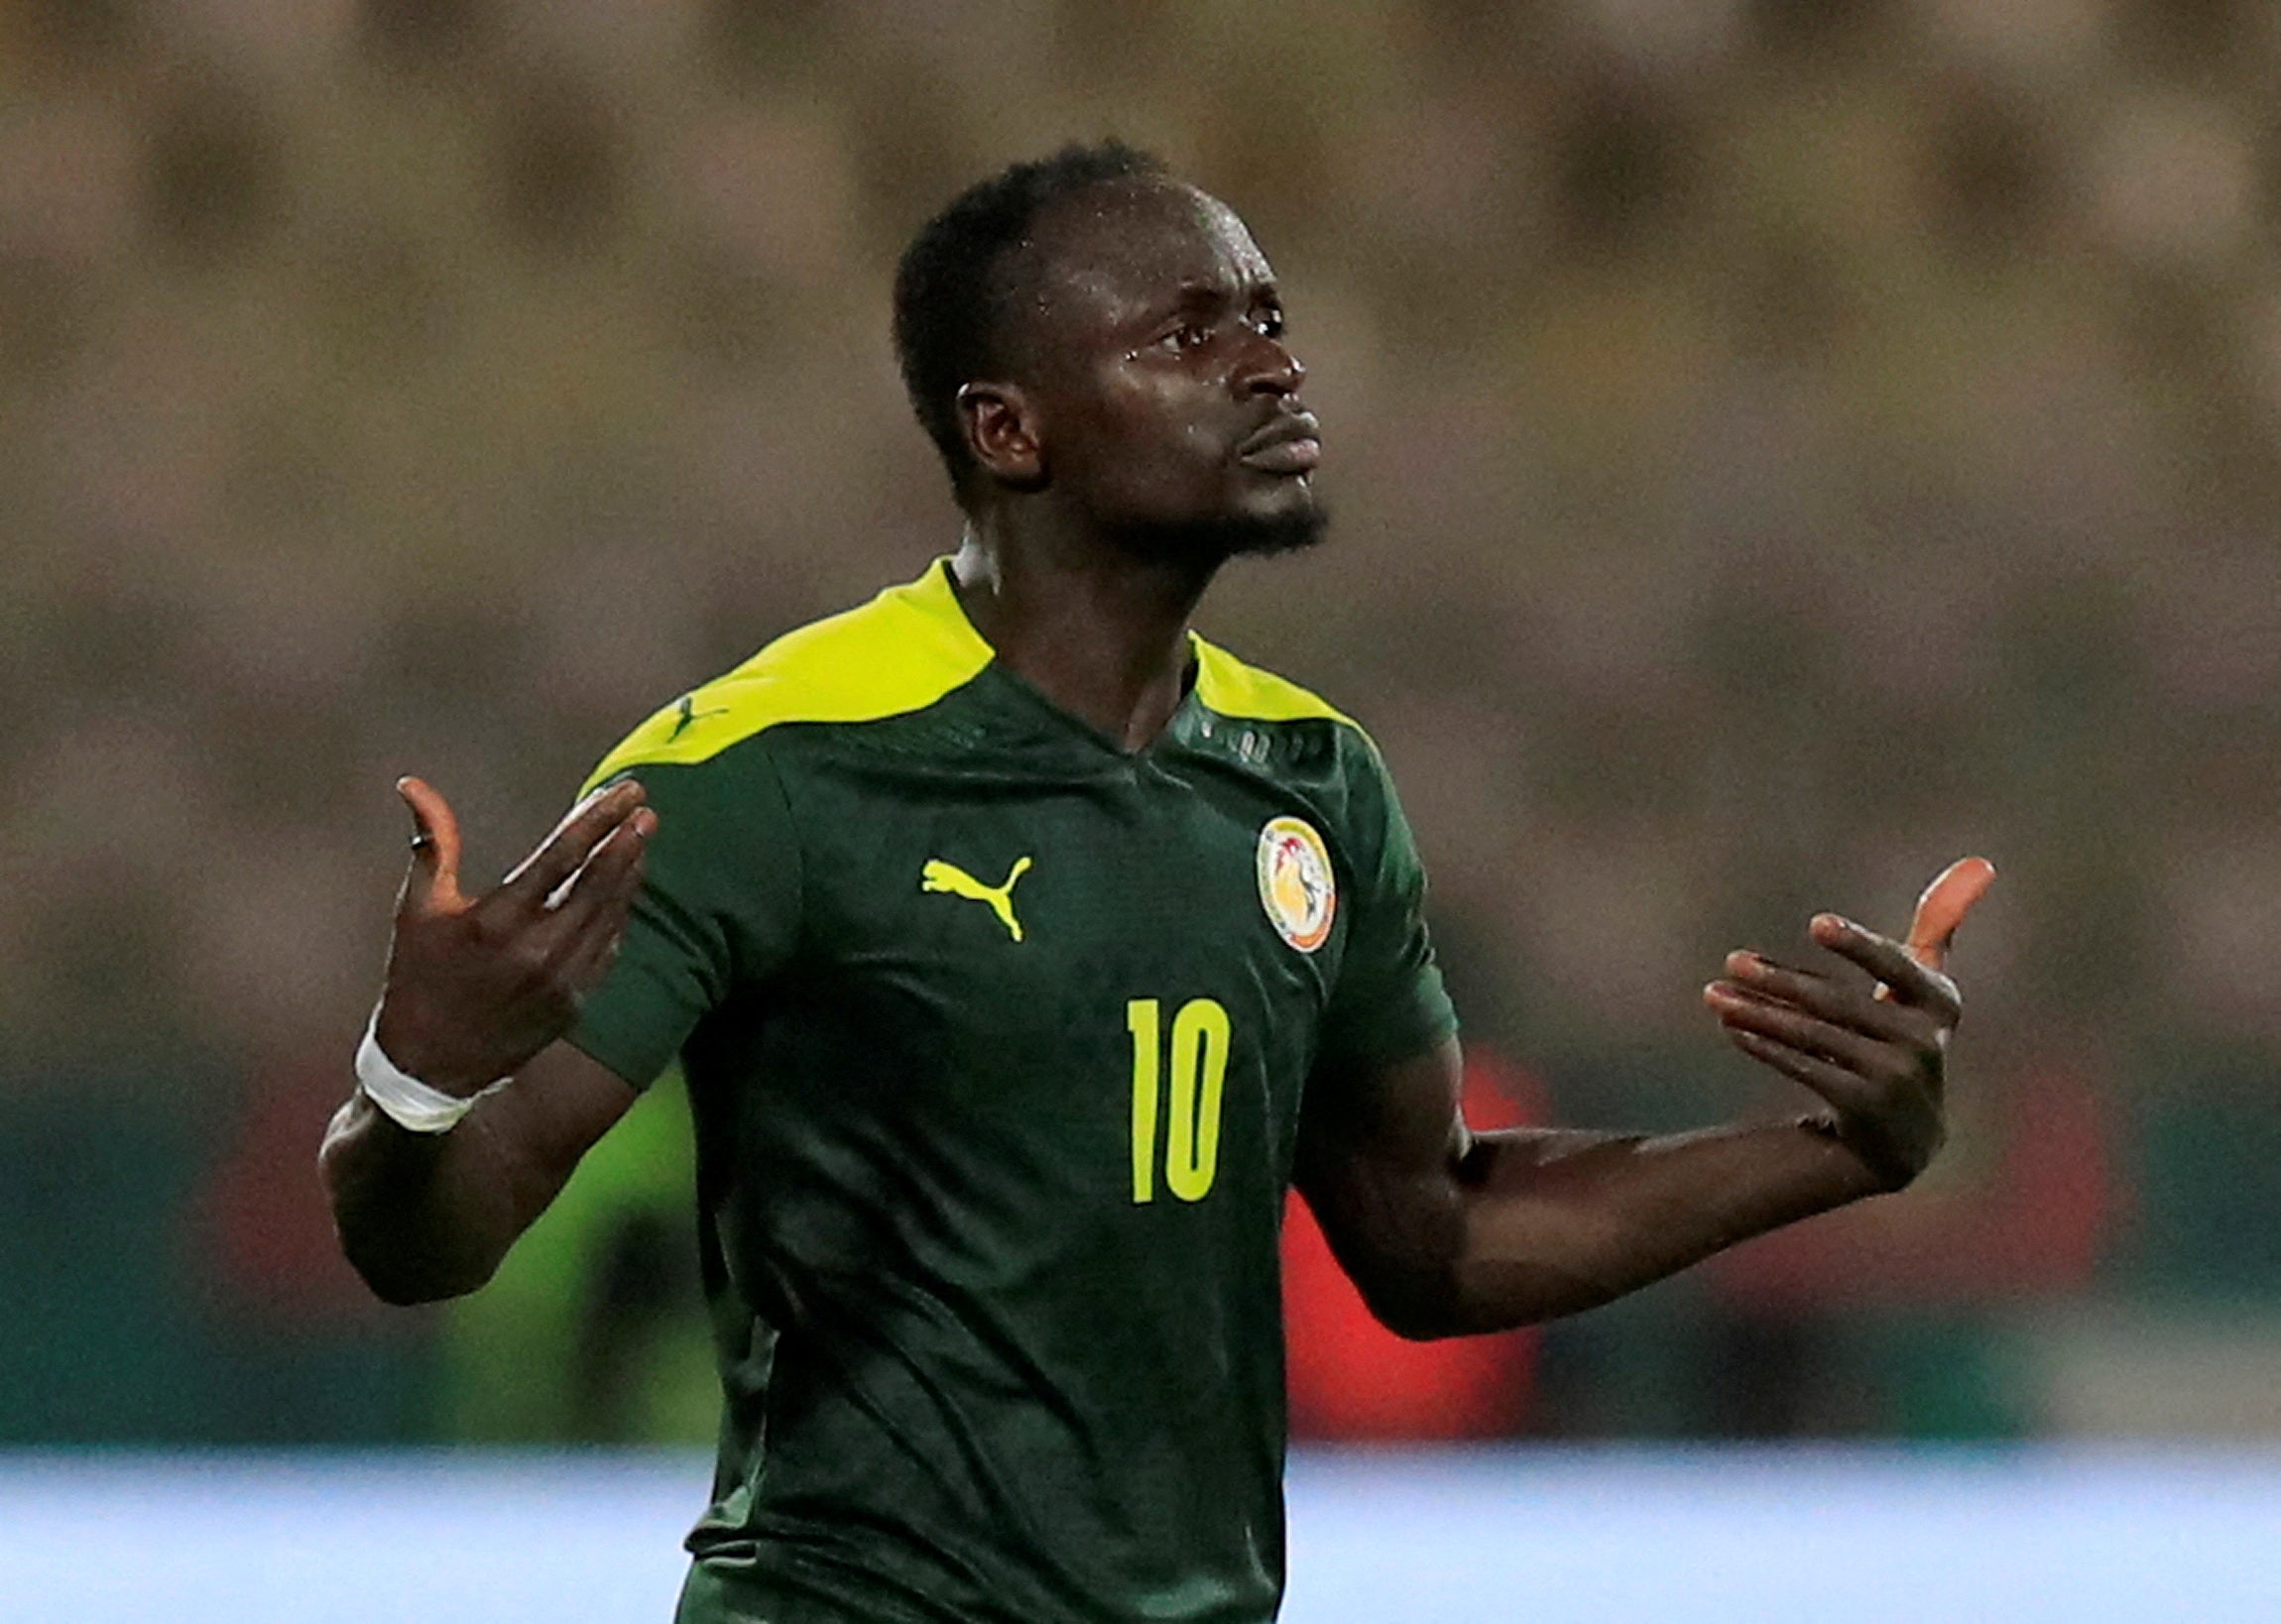 Sadio Mane would have led Senegal’s attack